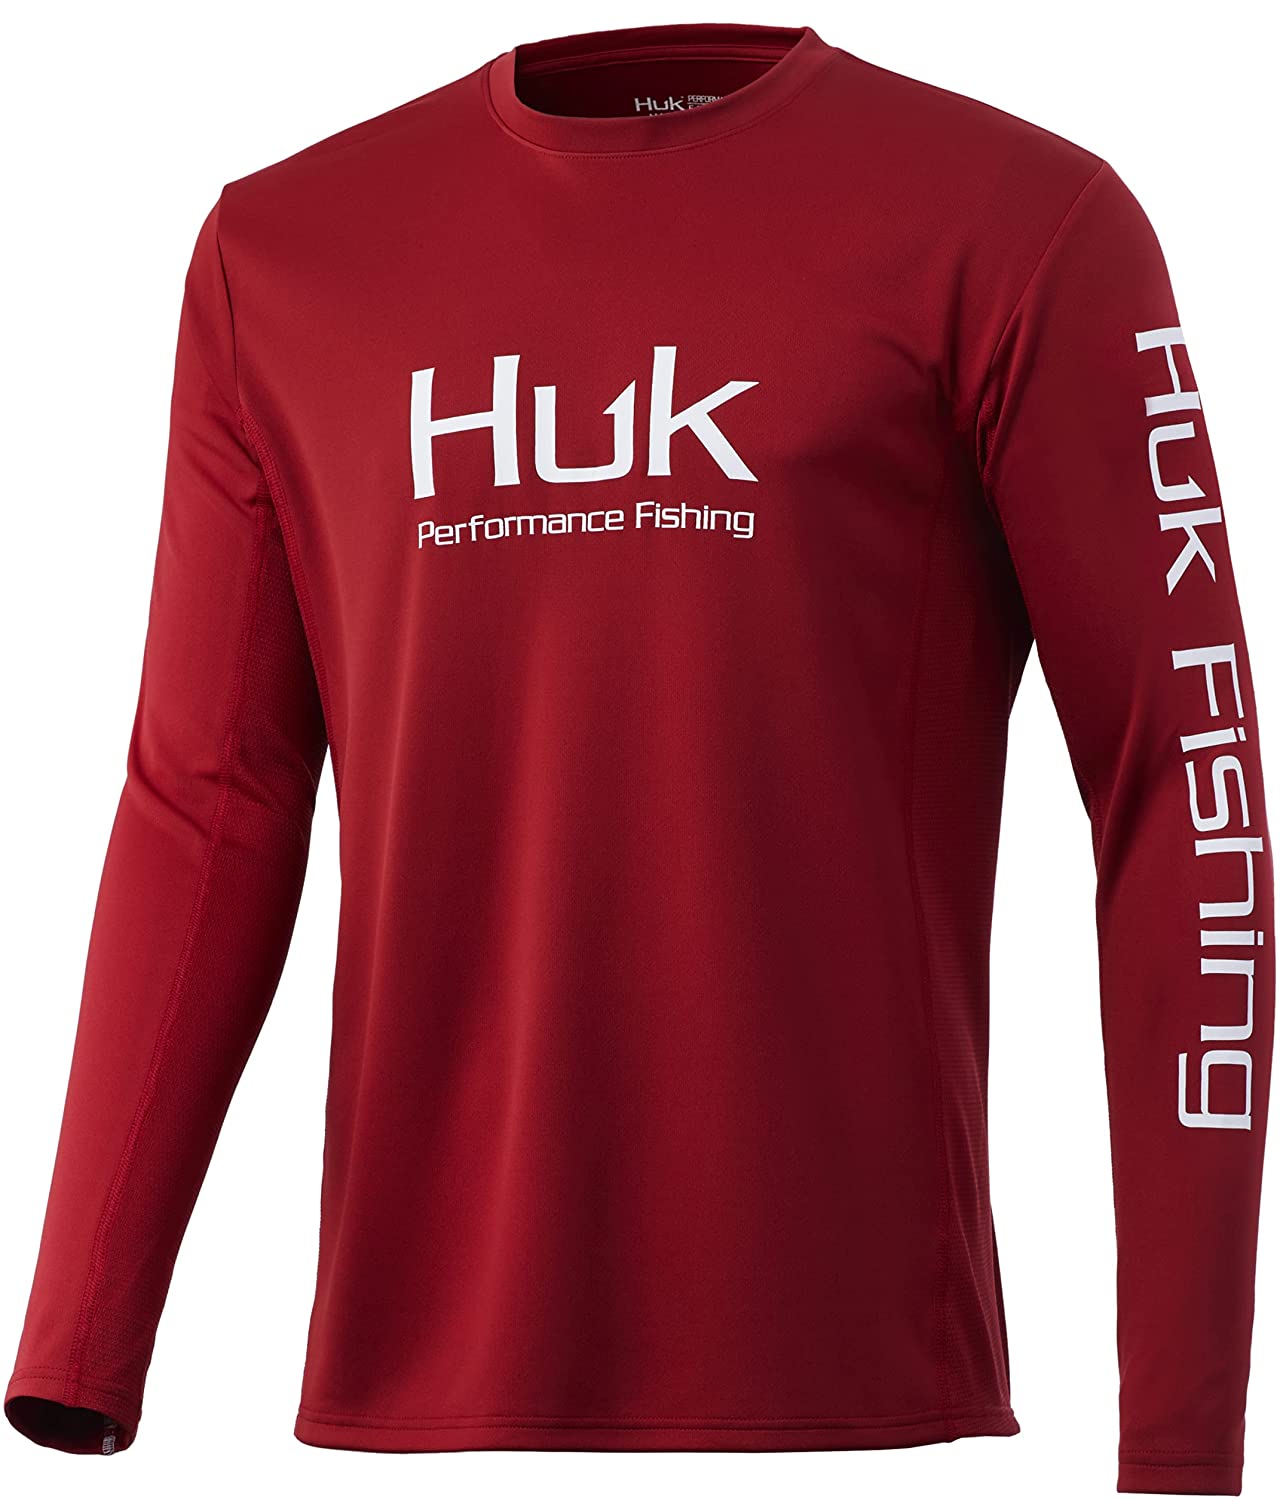 Huk Shirt Mens L Coral Pink Long Sleeve Crew Neck Performance